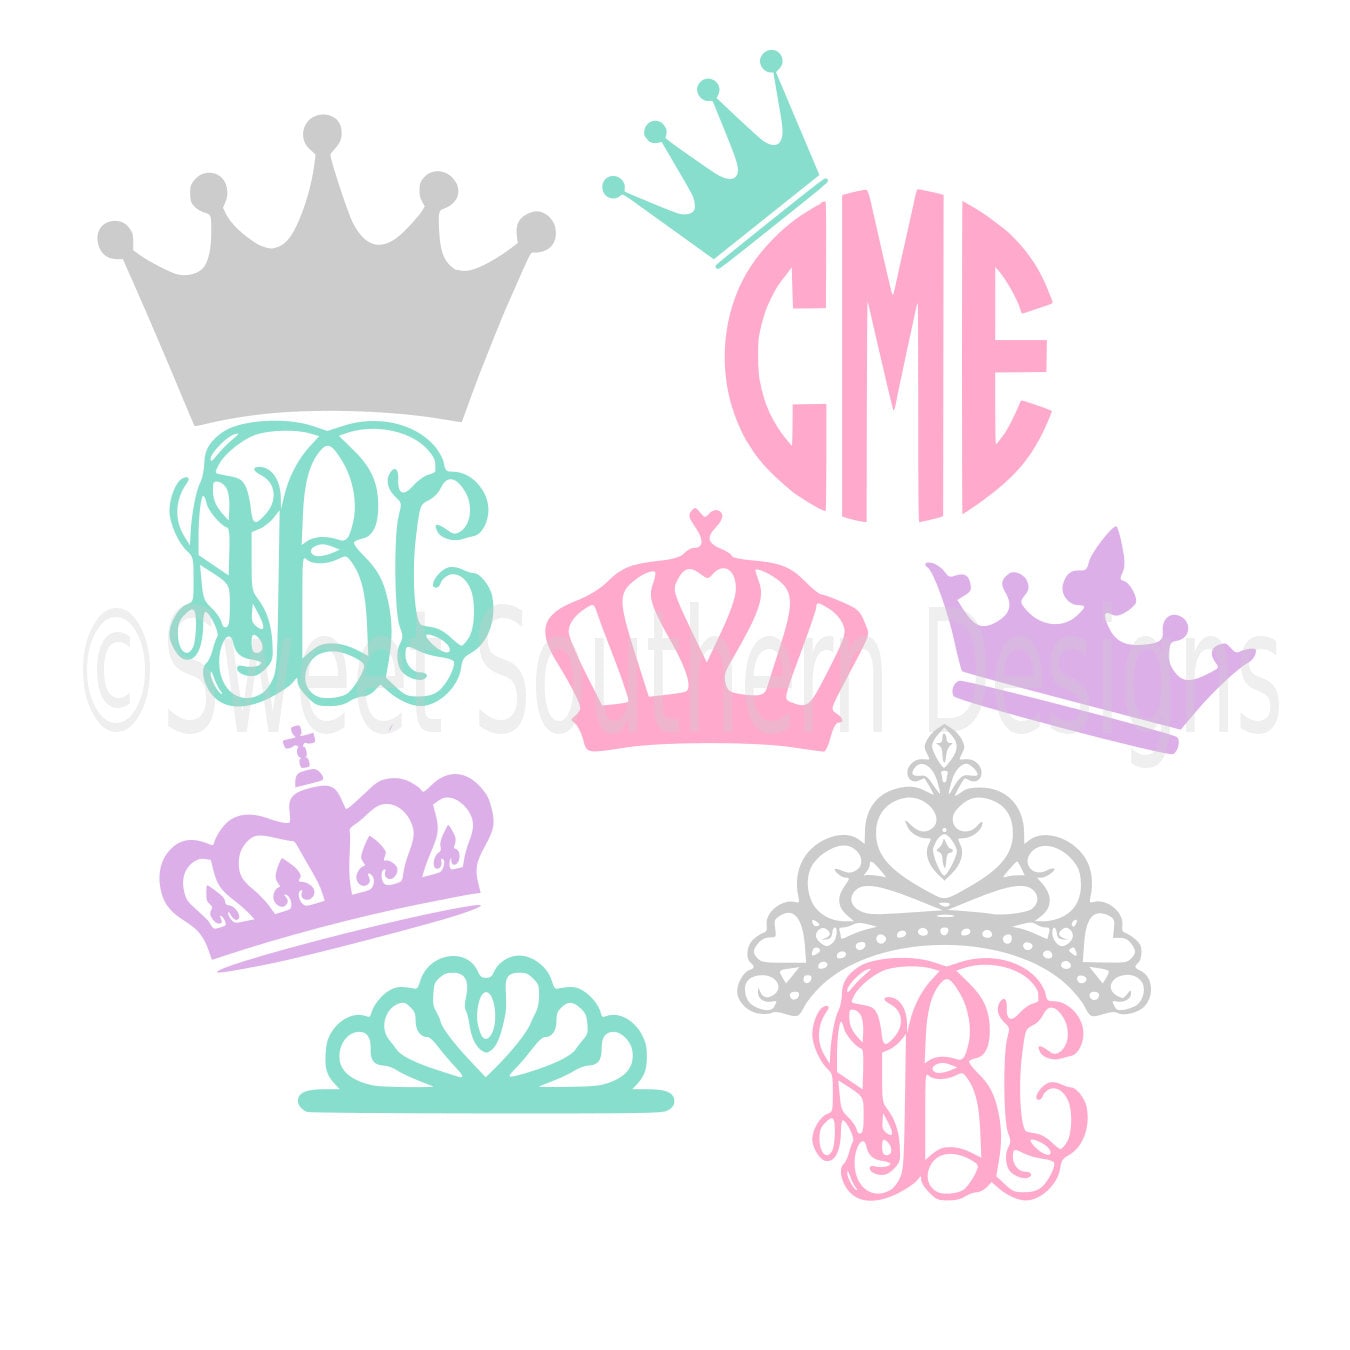 Download Monogram tiara crown SVG instant download design for cricut or